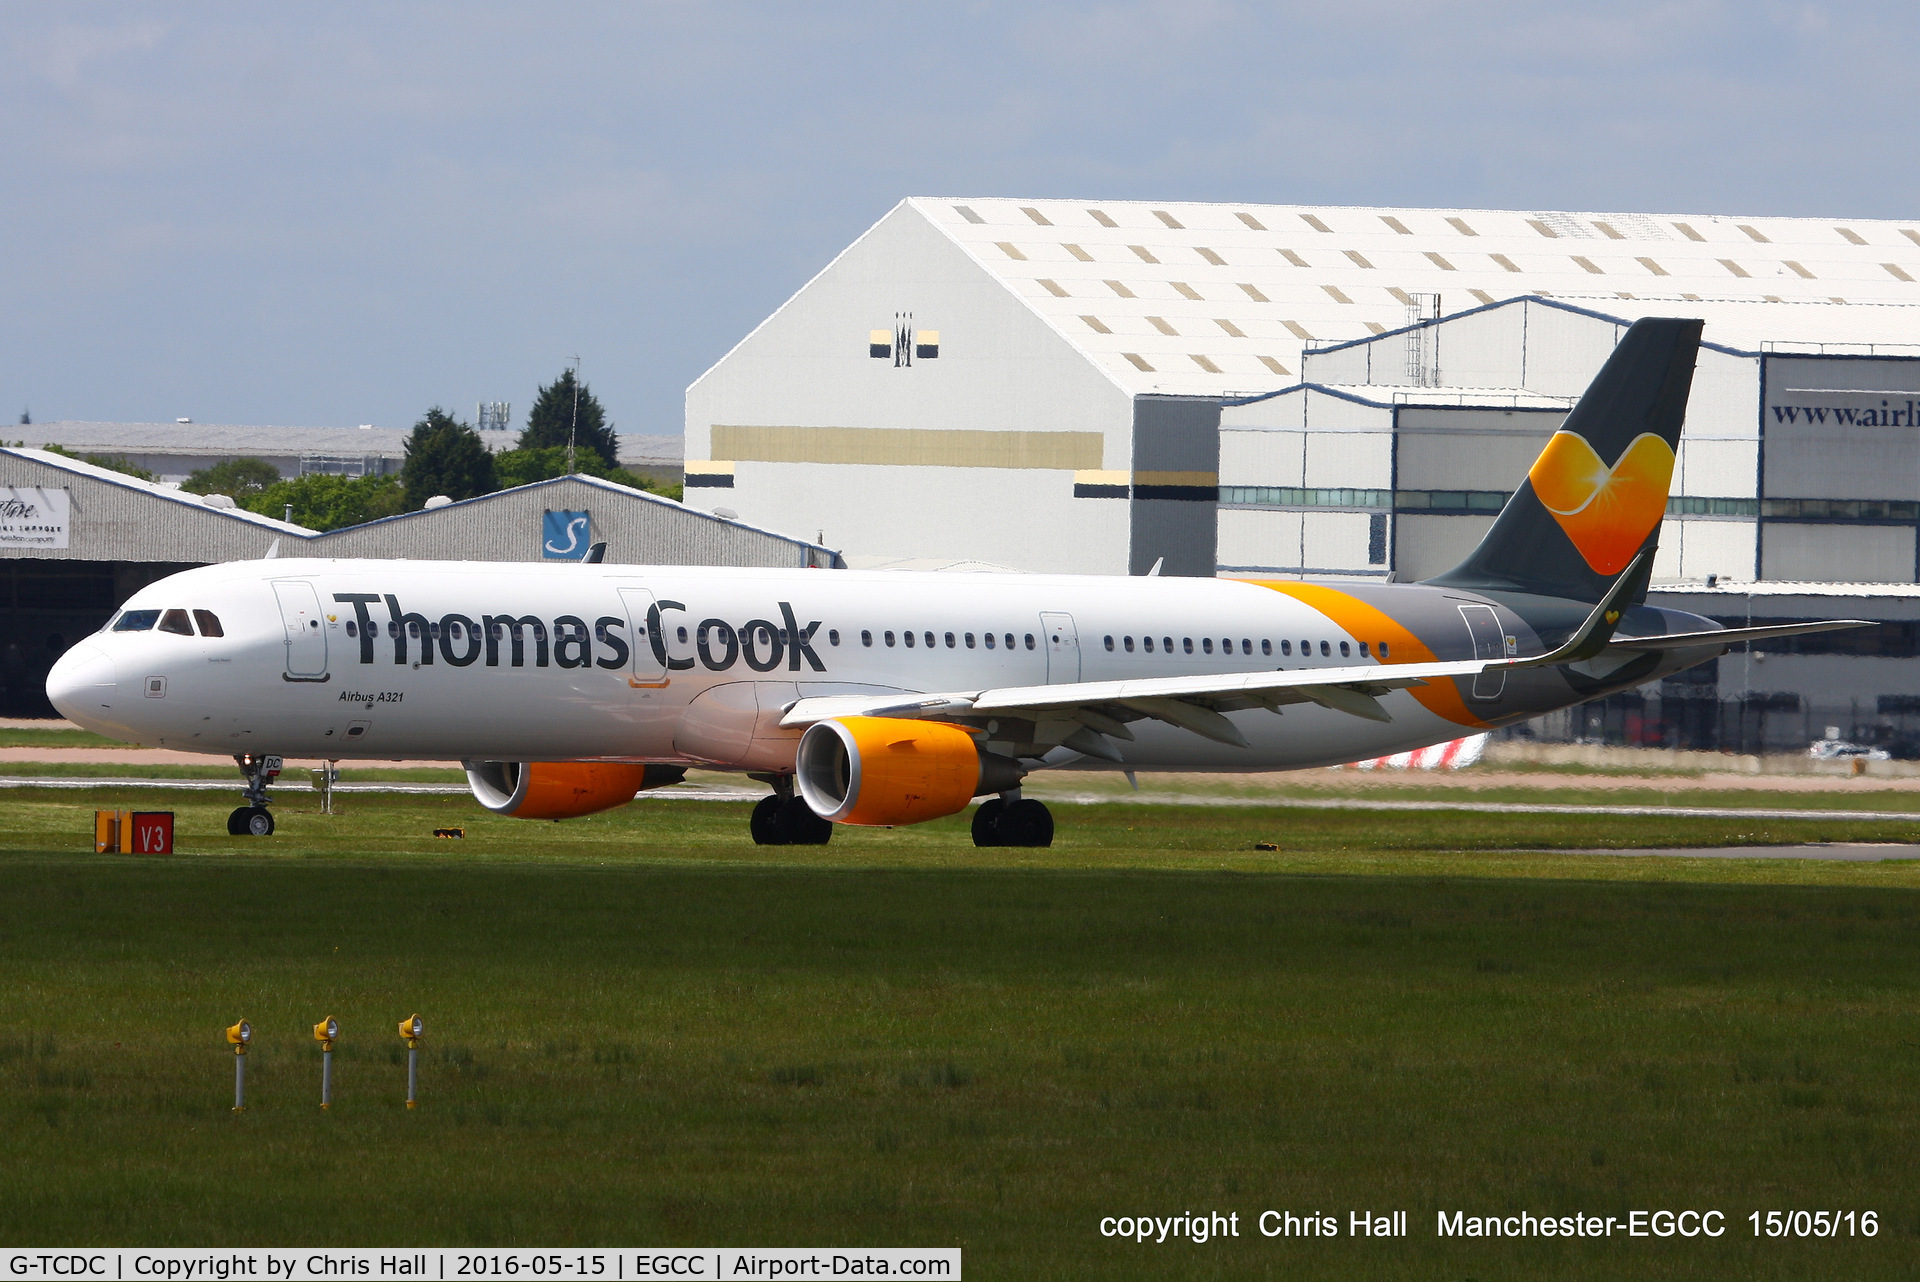 G-TCDC, 2013 Airbus A321-211 C/N 5872, Thomas Cook